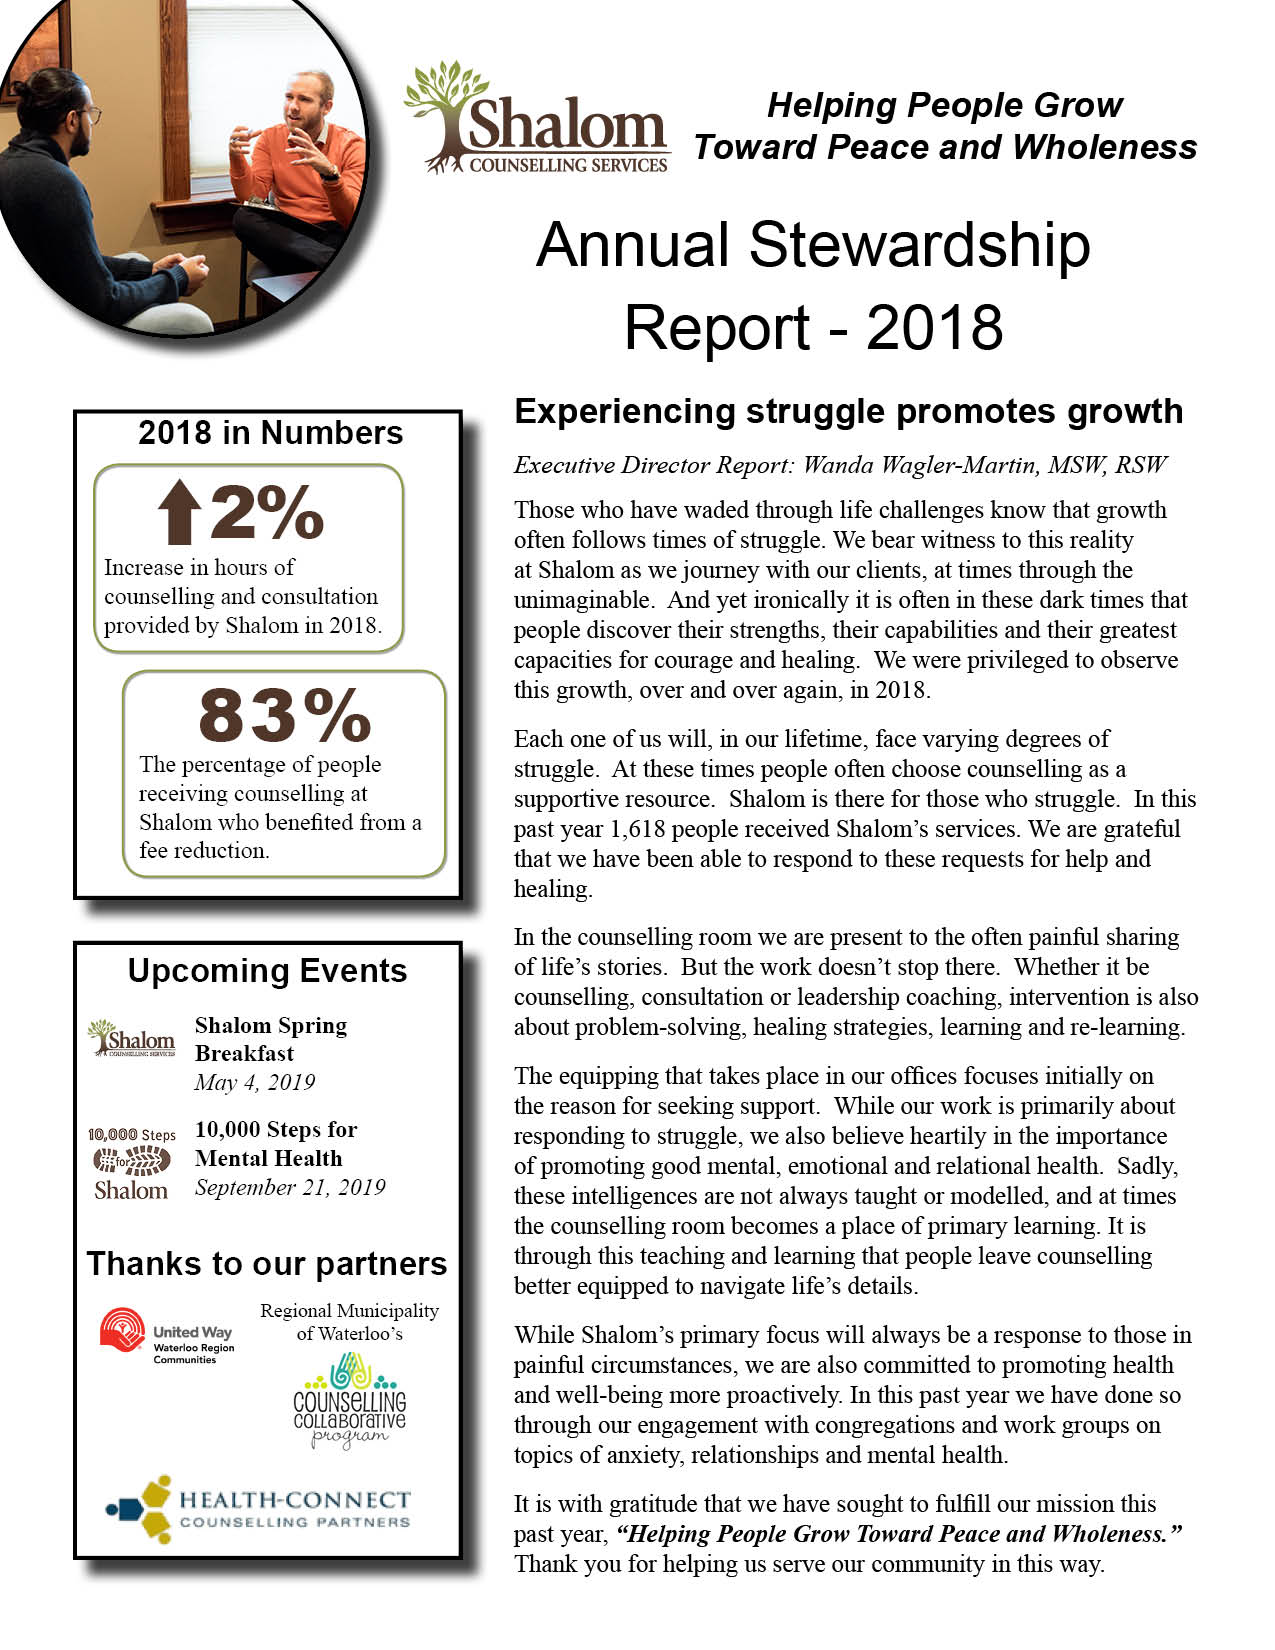 Annual Stewardship Report - 2018